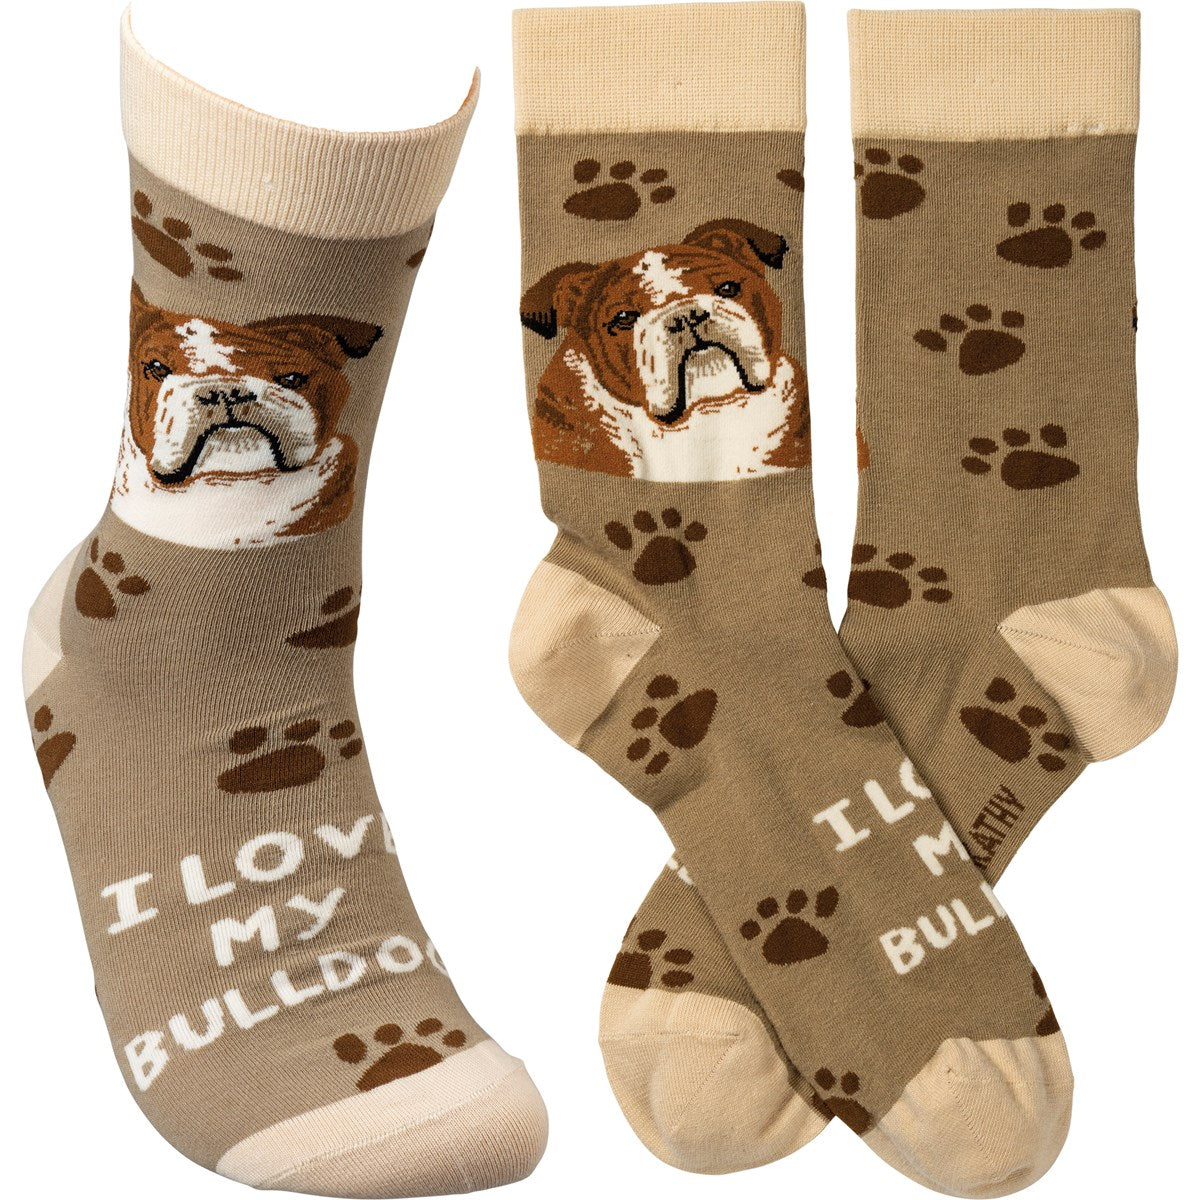 I Love My Bulldog Socks